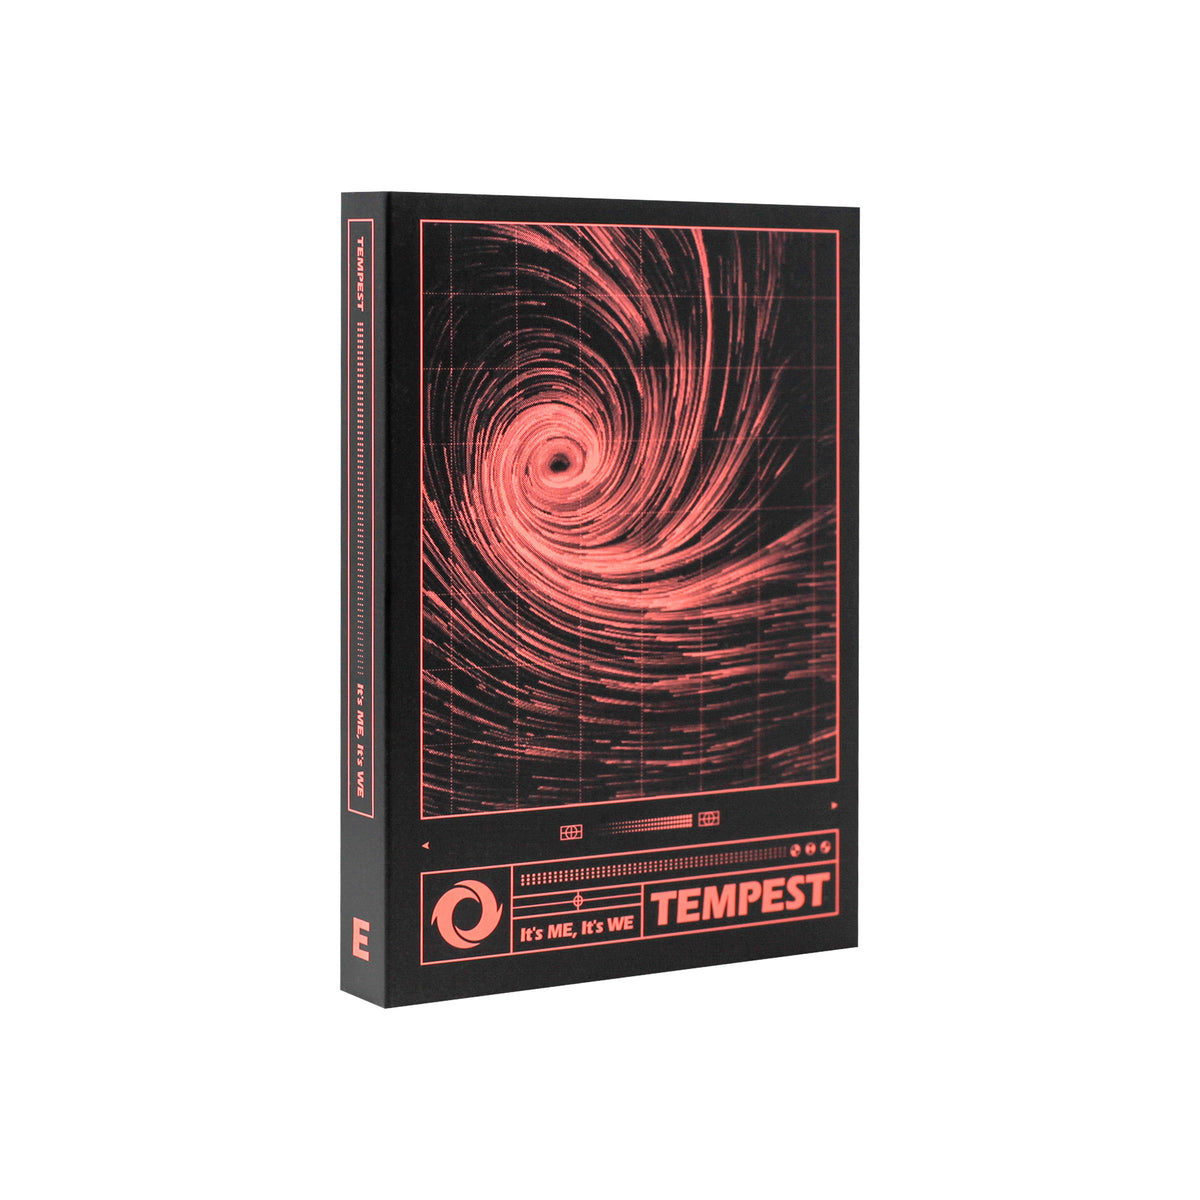 TEMPEST - It&#39;s ME It&#39;s WE 1st Mini Album 2 variations - It&#39;s We Ver main image 2